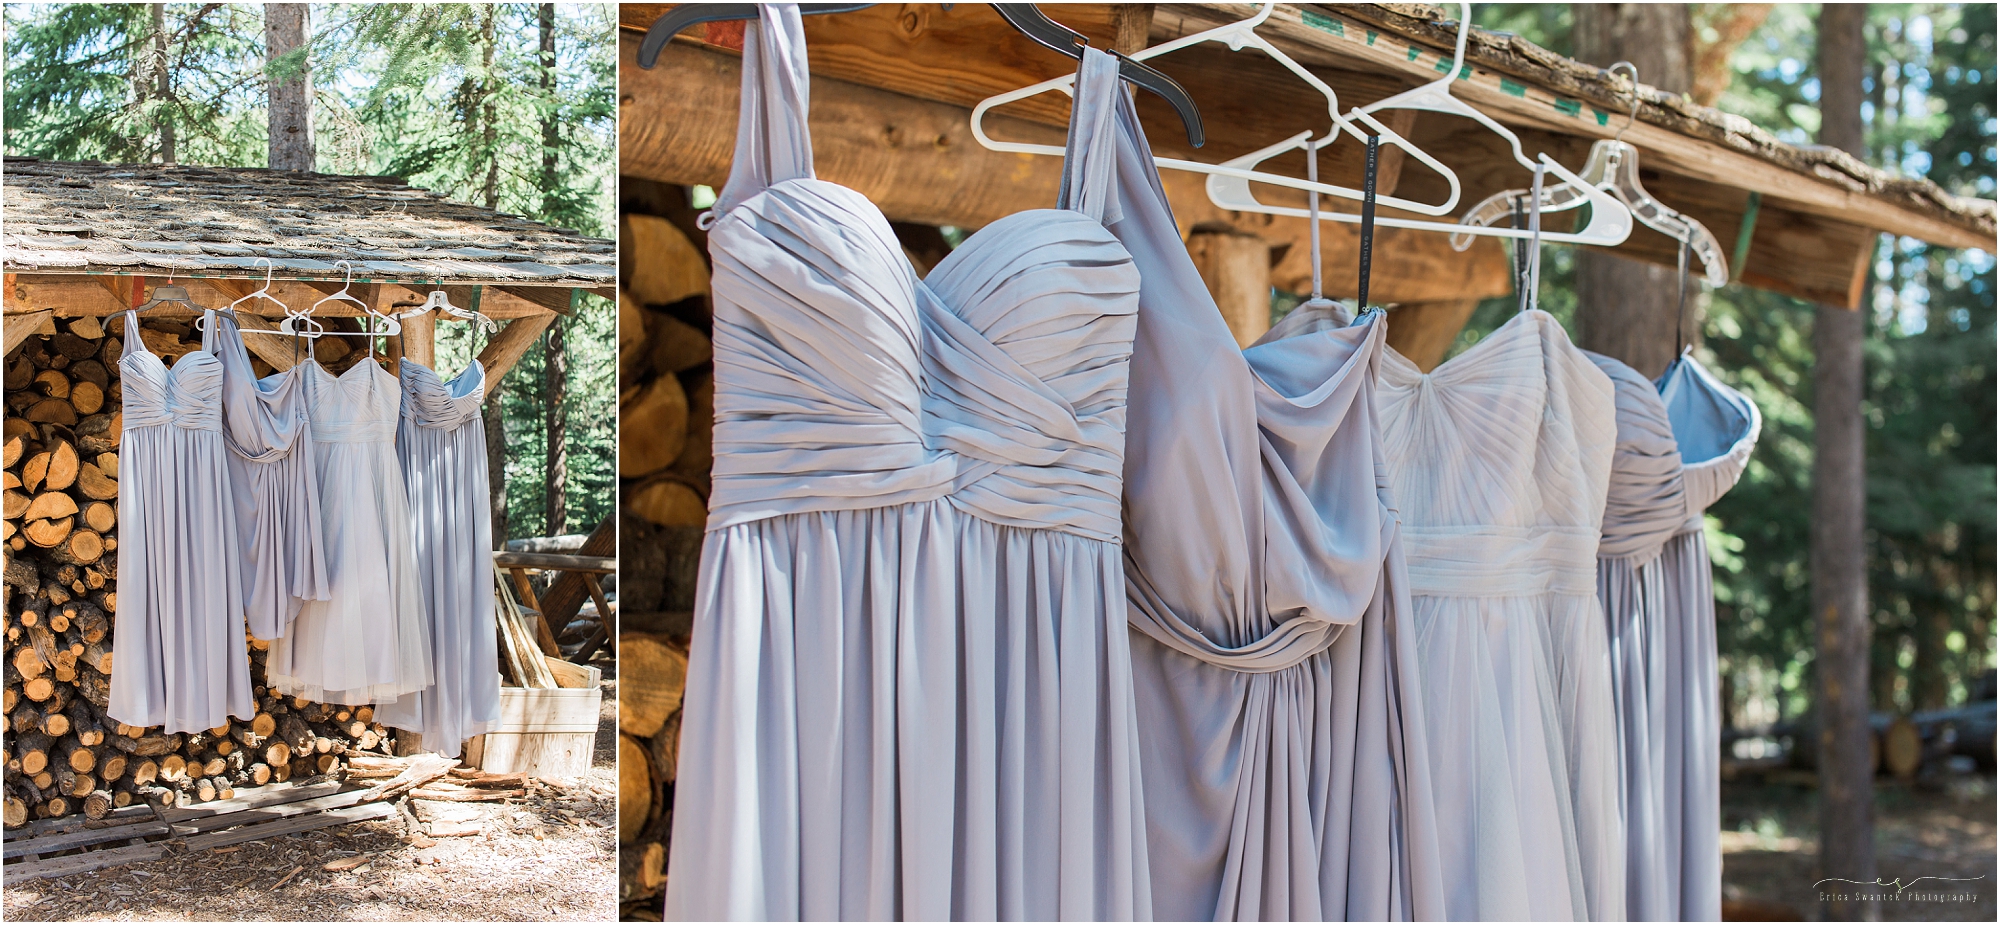 Beautiful blue bridesmaid dresses at this rustic Oregon lodge wedding near Bend. 